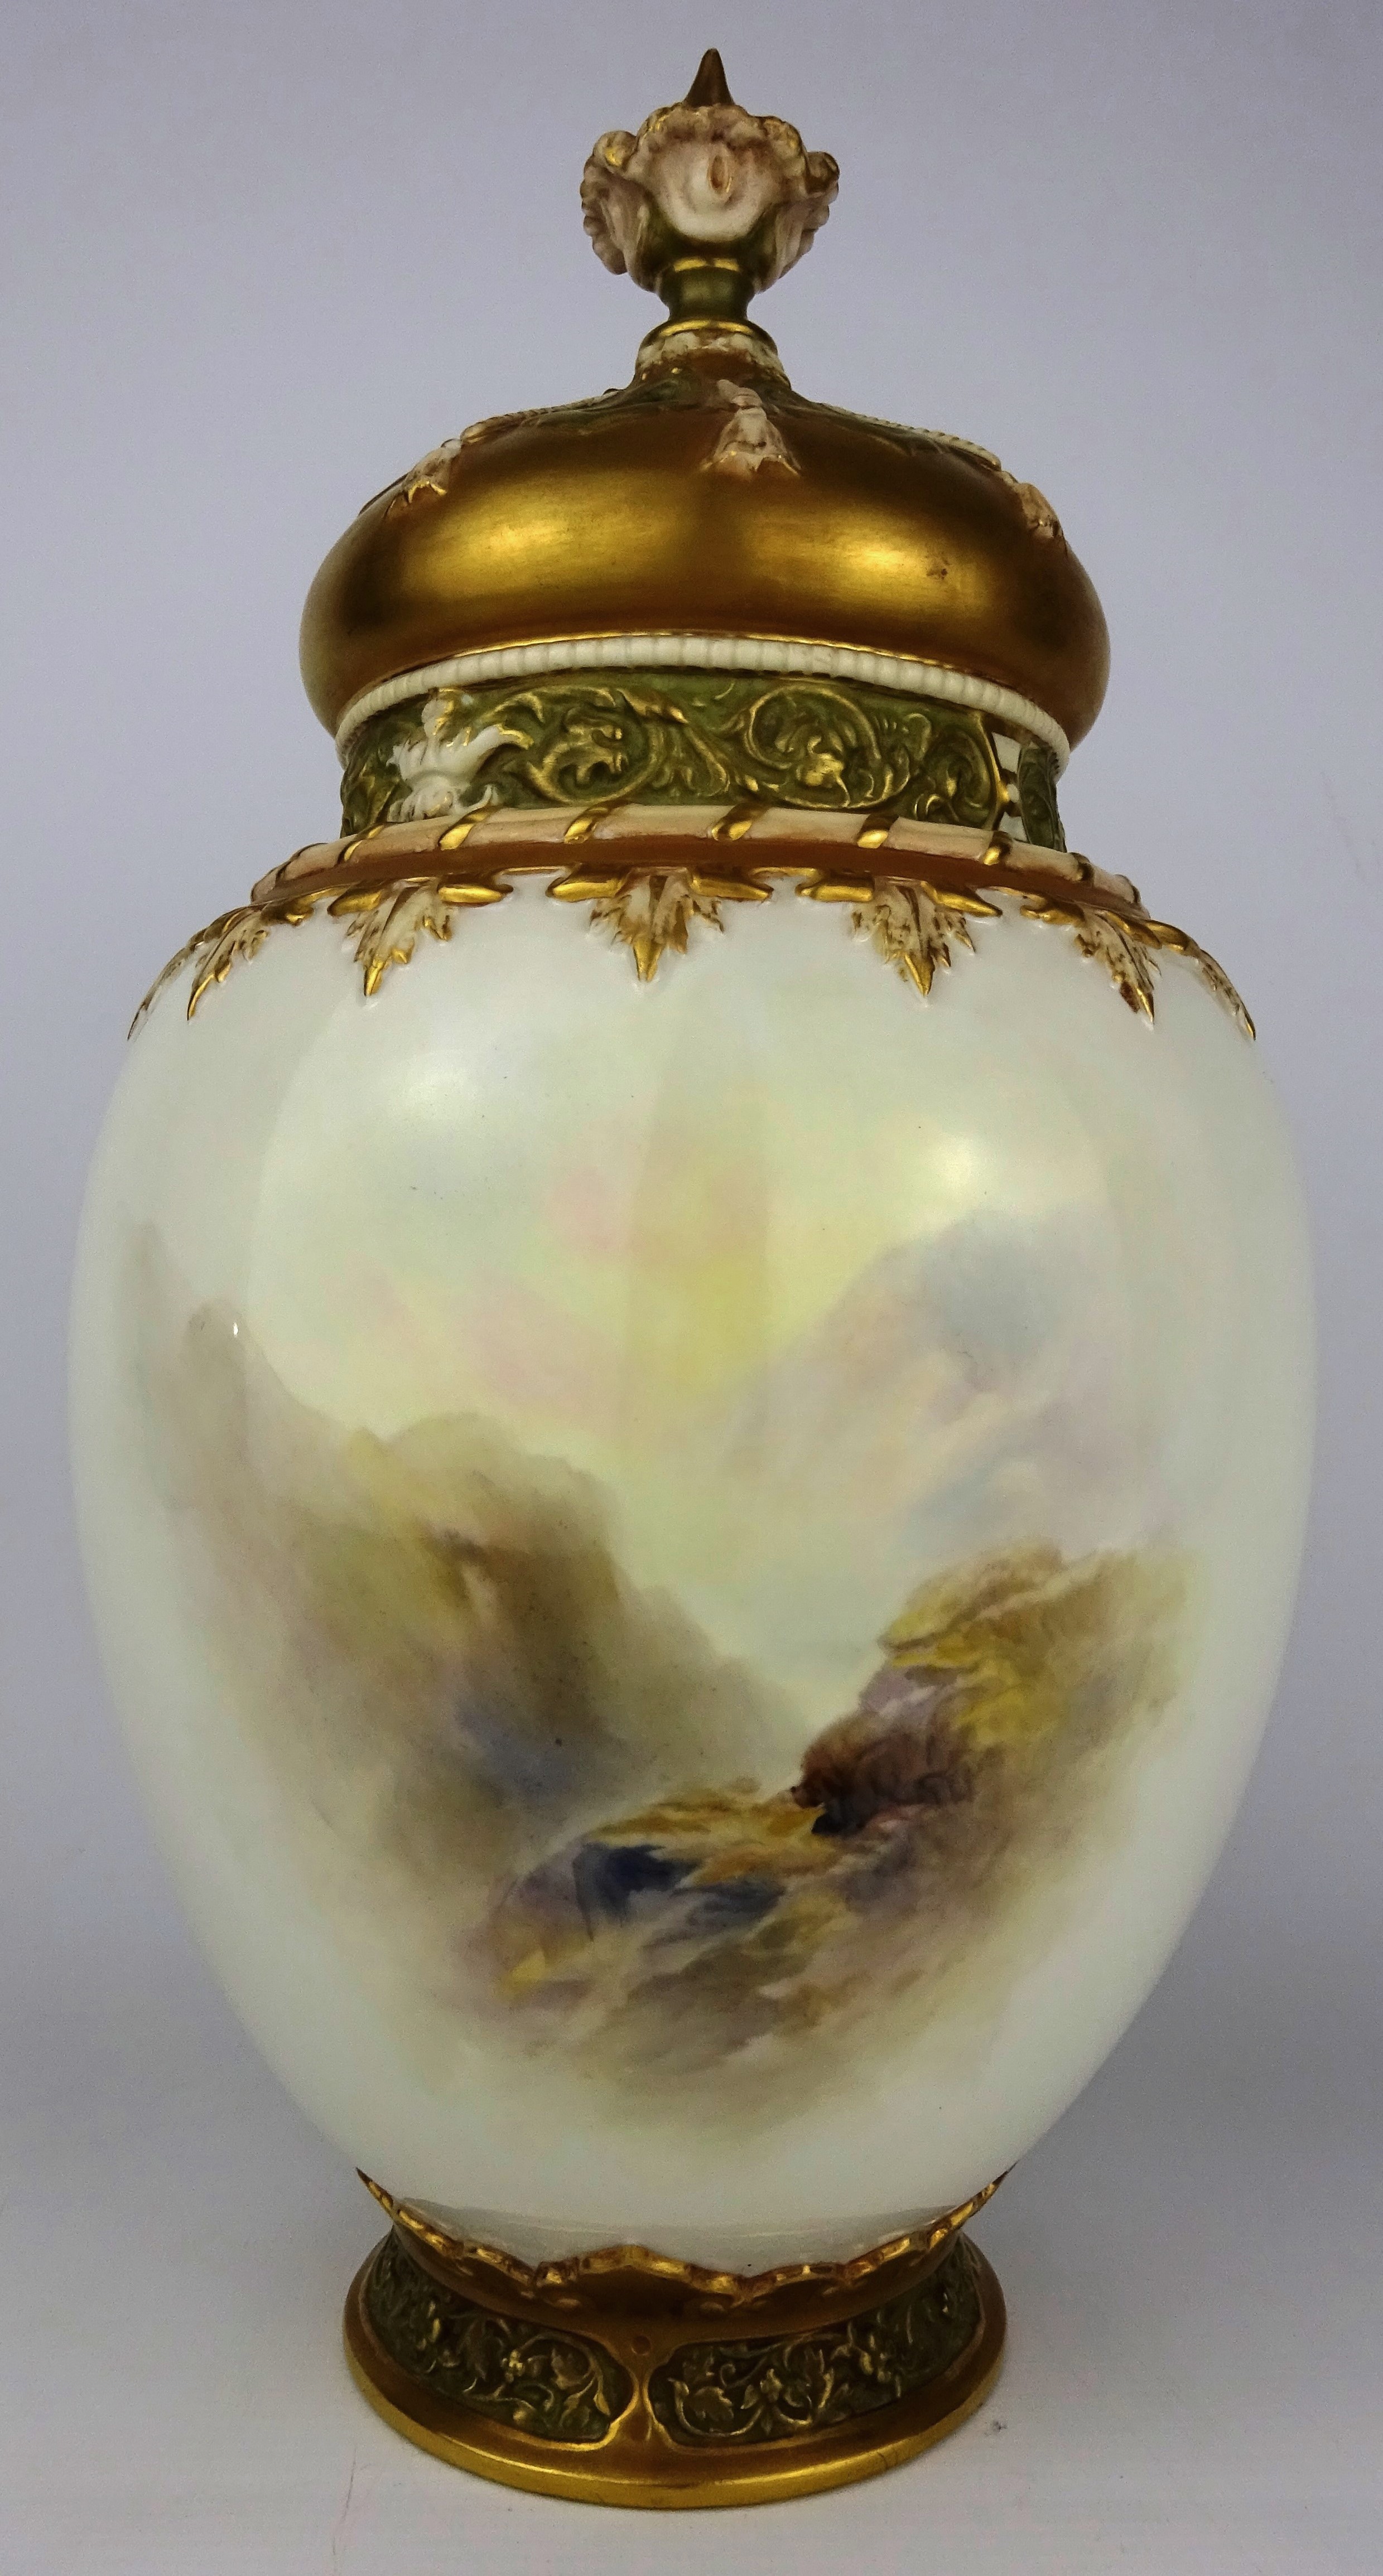 Royal Worcester porcelain ovoid pot-pourri vase, - Image 2 of 3